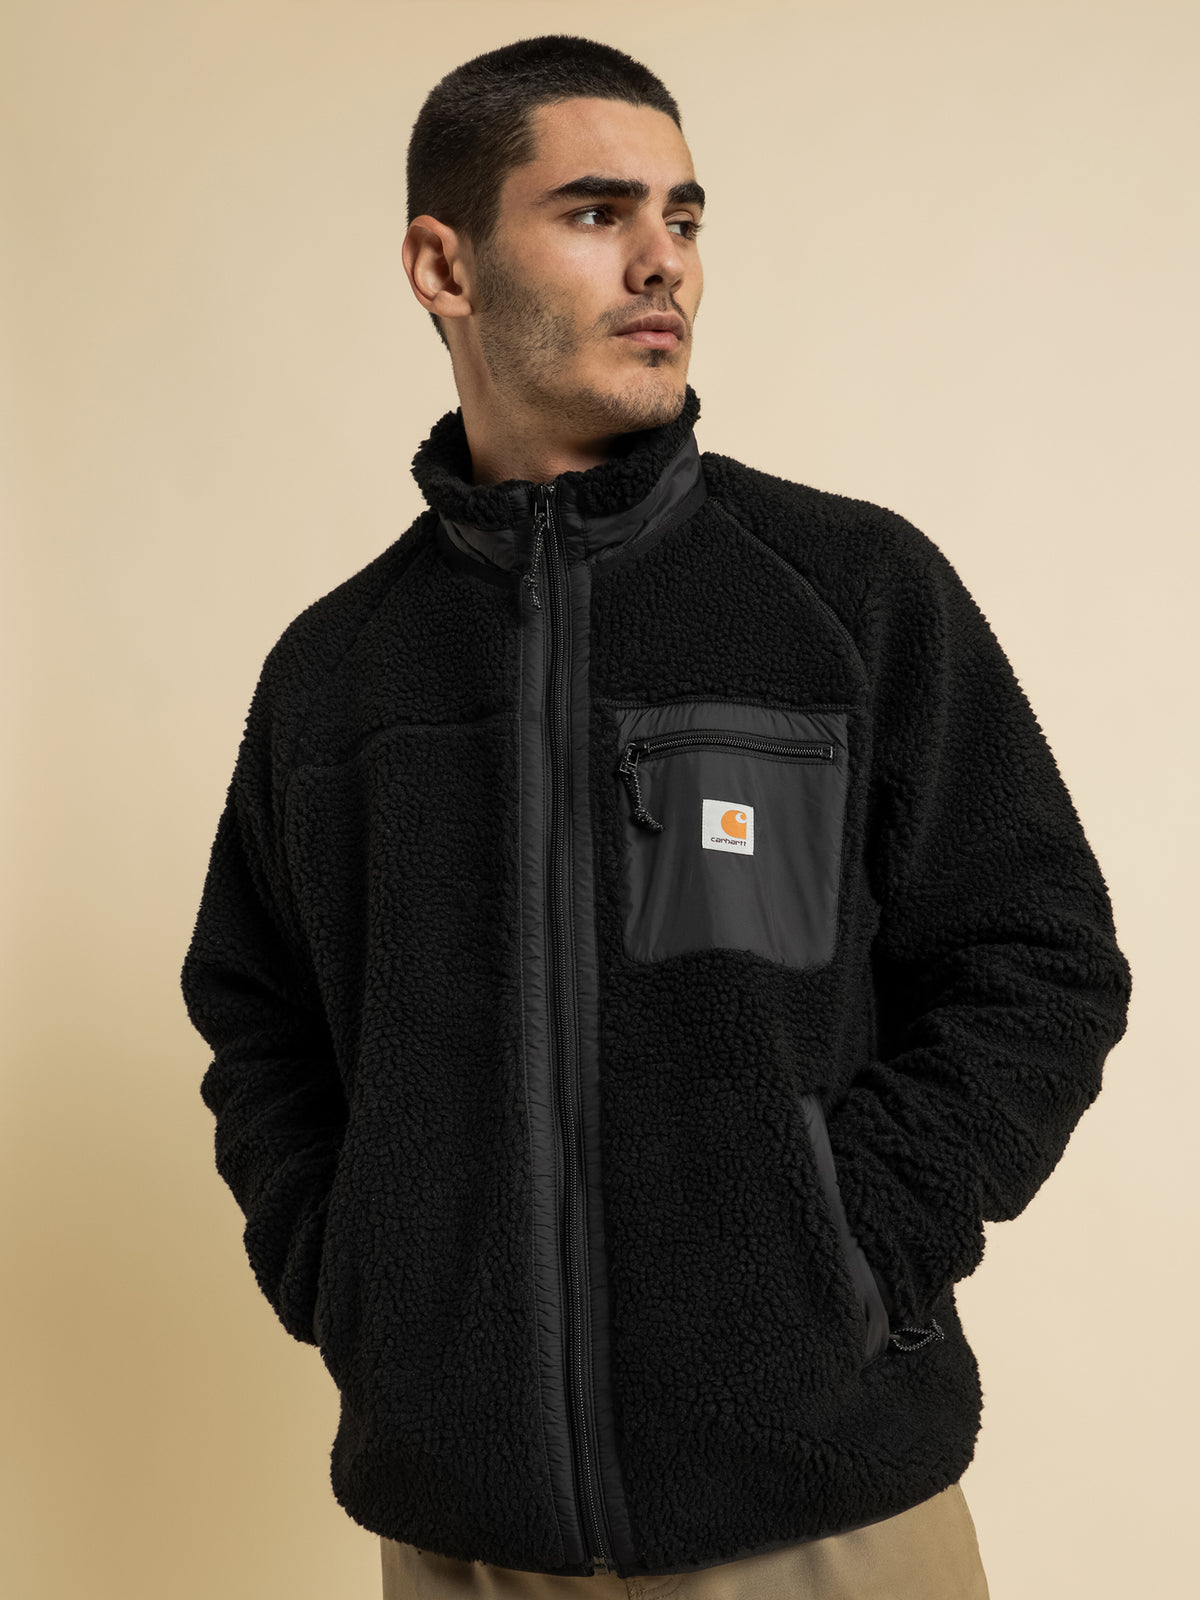 Prentis Liner Sherpa Jacket in Black - Glue Store